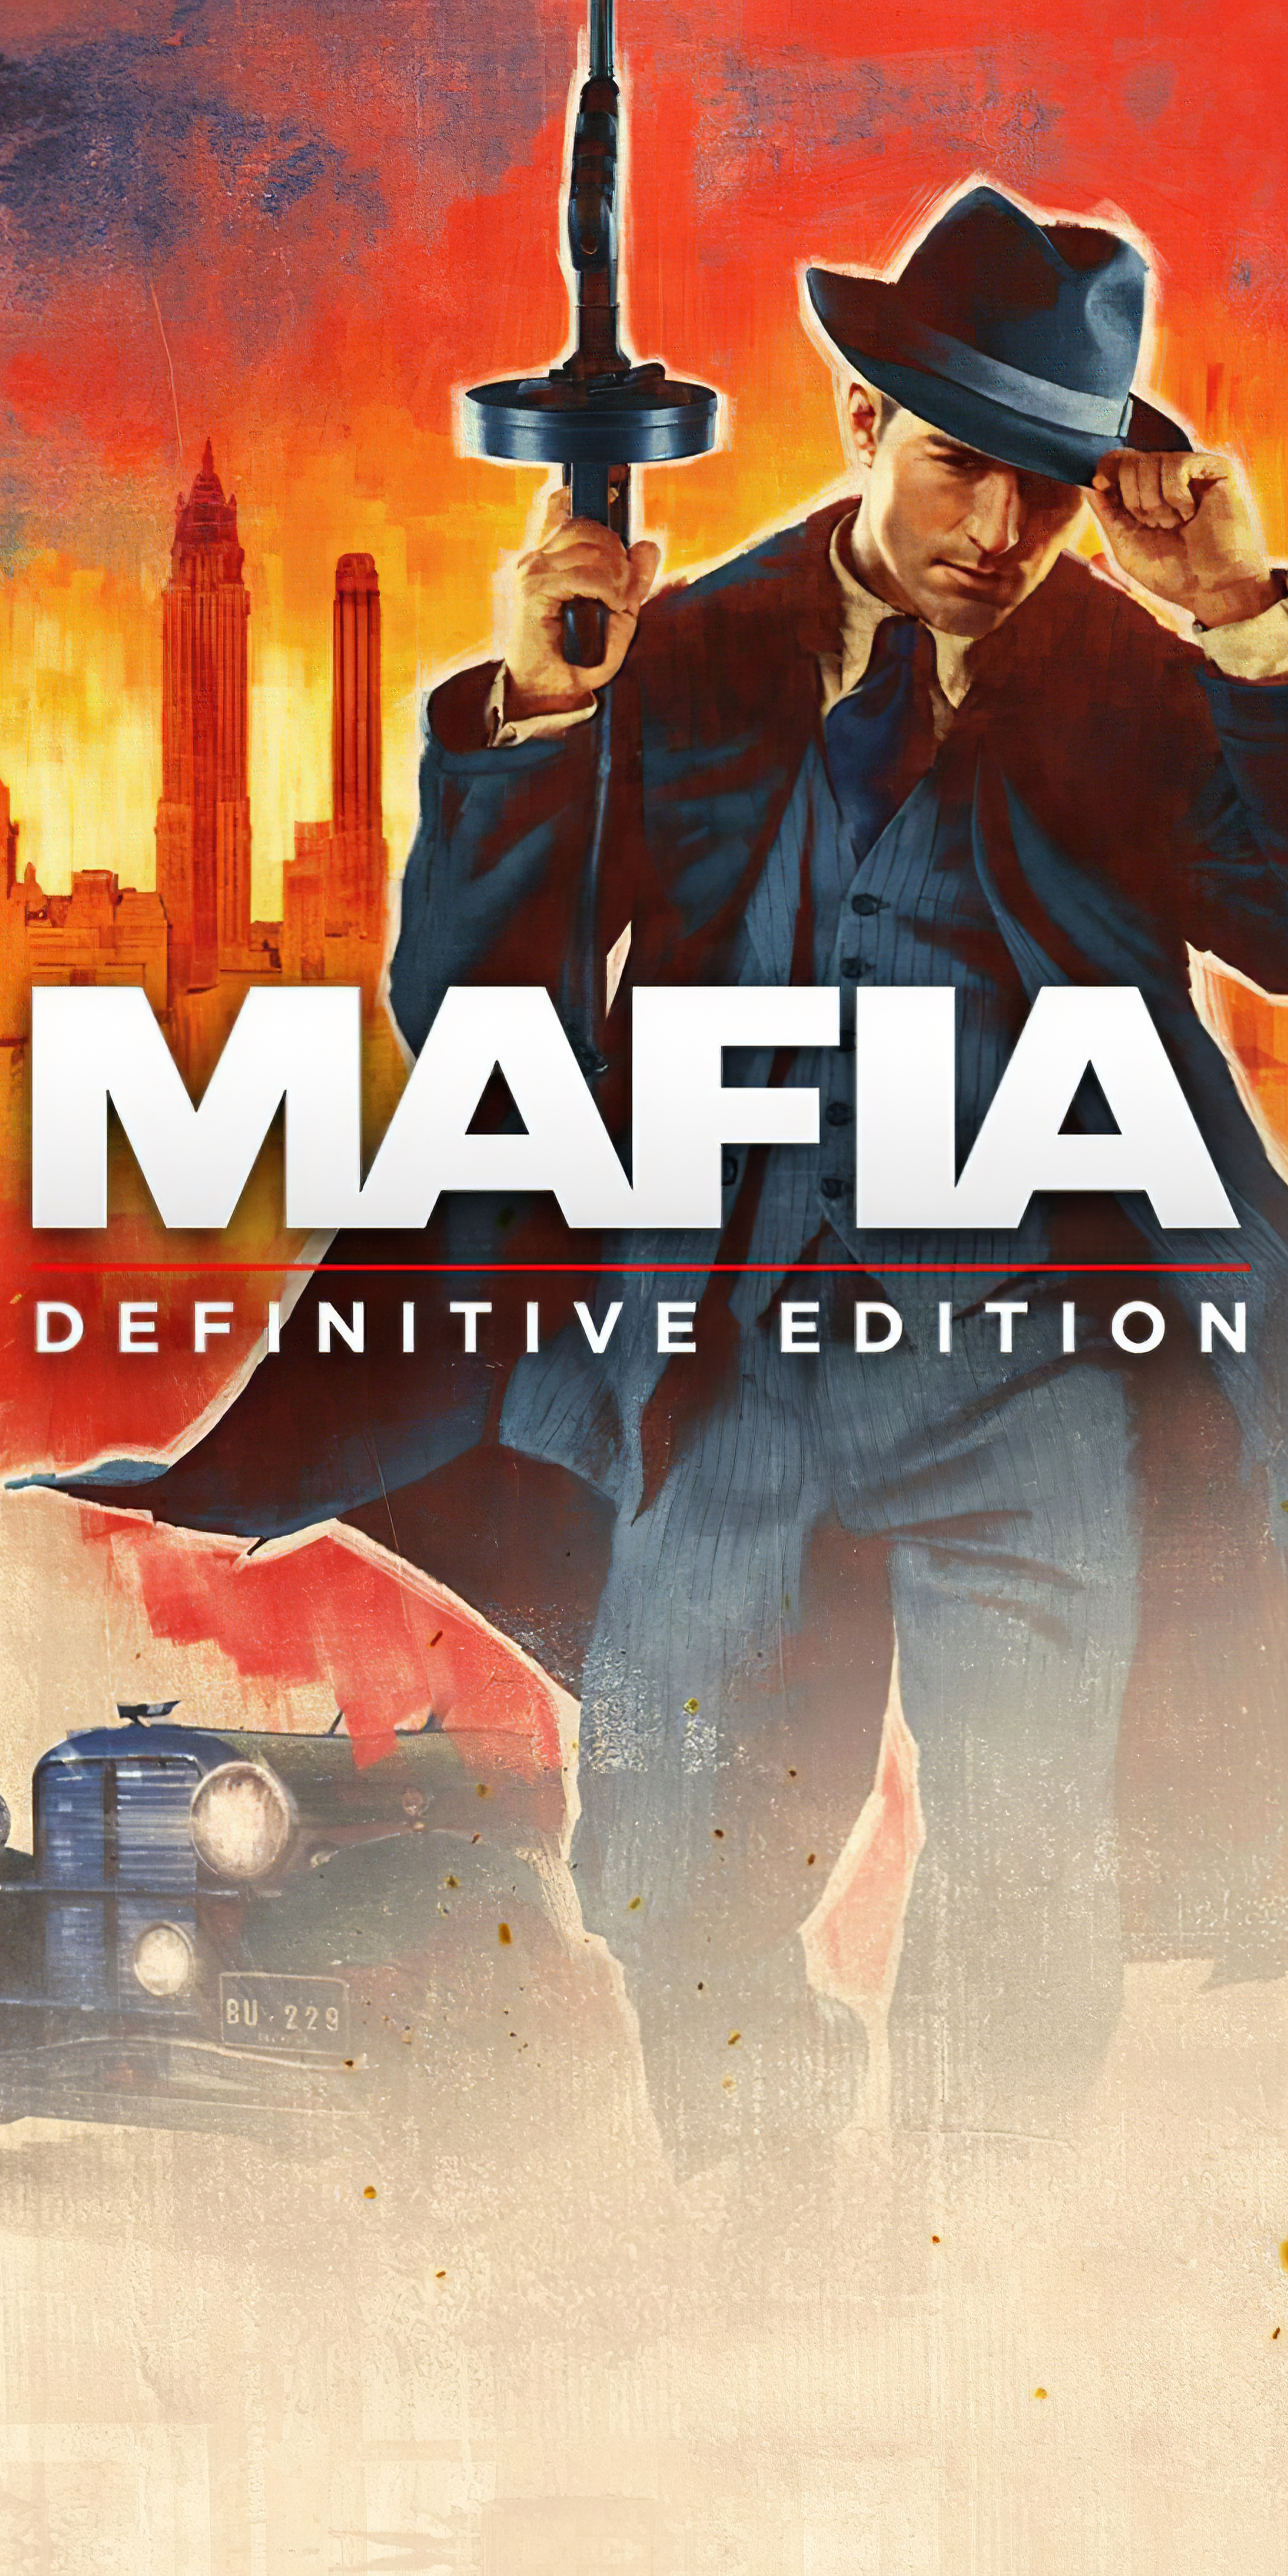 Mafia 1 Definitive Edition Phone Wallpaper (18: enhanced using gigapixel)